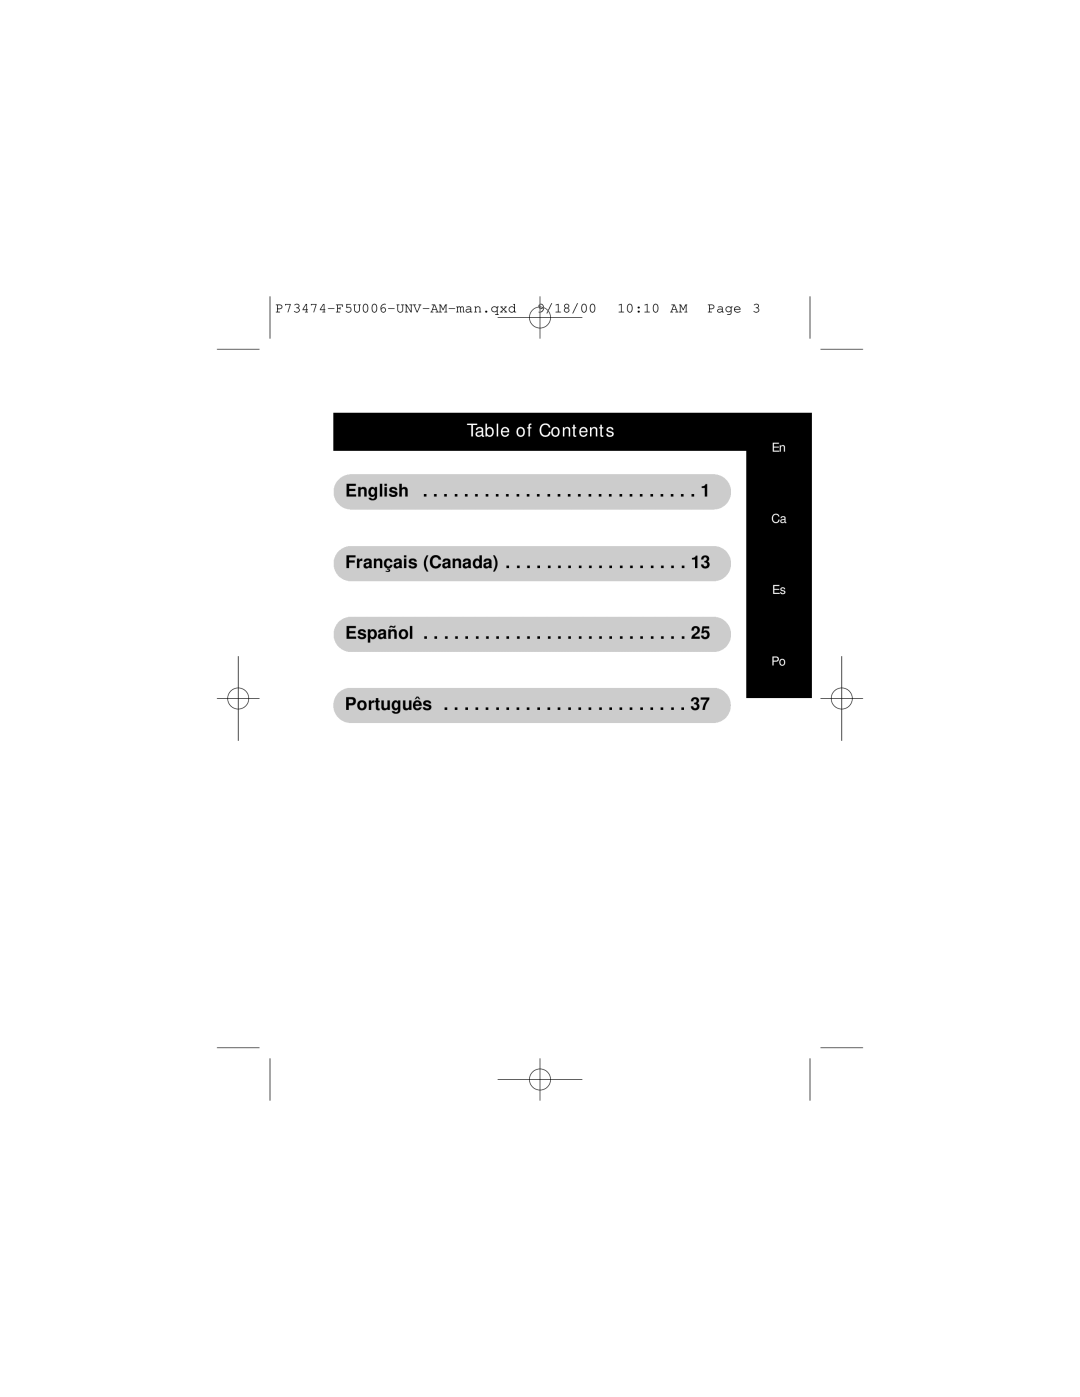 Belkin P73474, F5U006-UNV user manual Table of Contents, English, Français Canada, Español, Português 